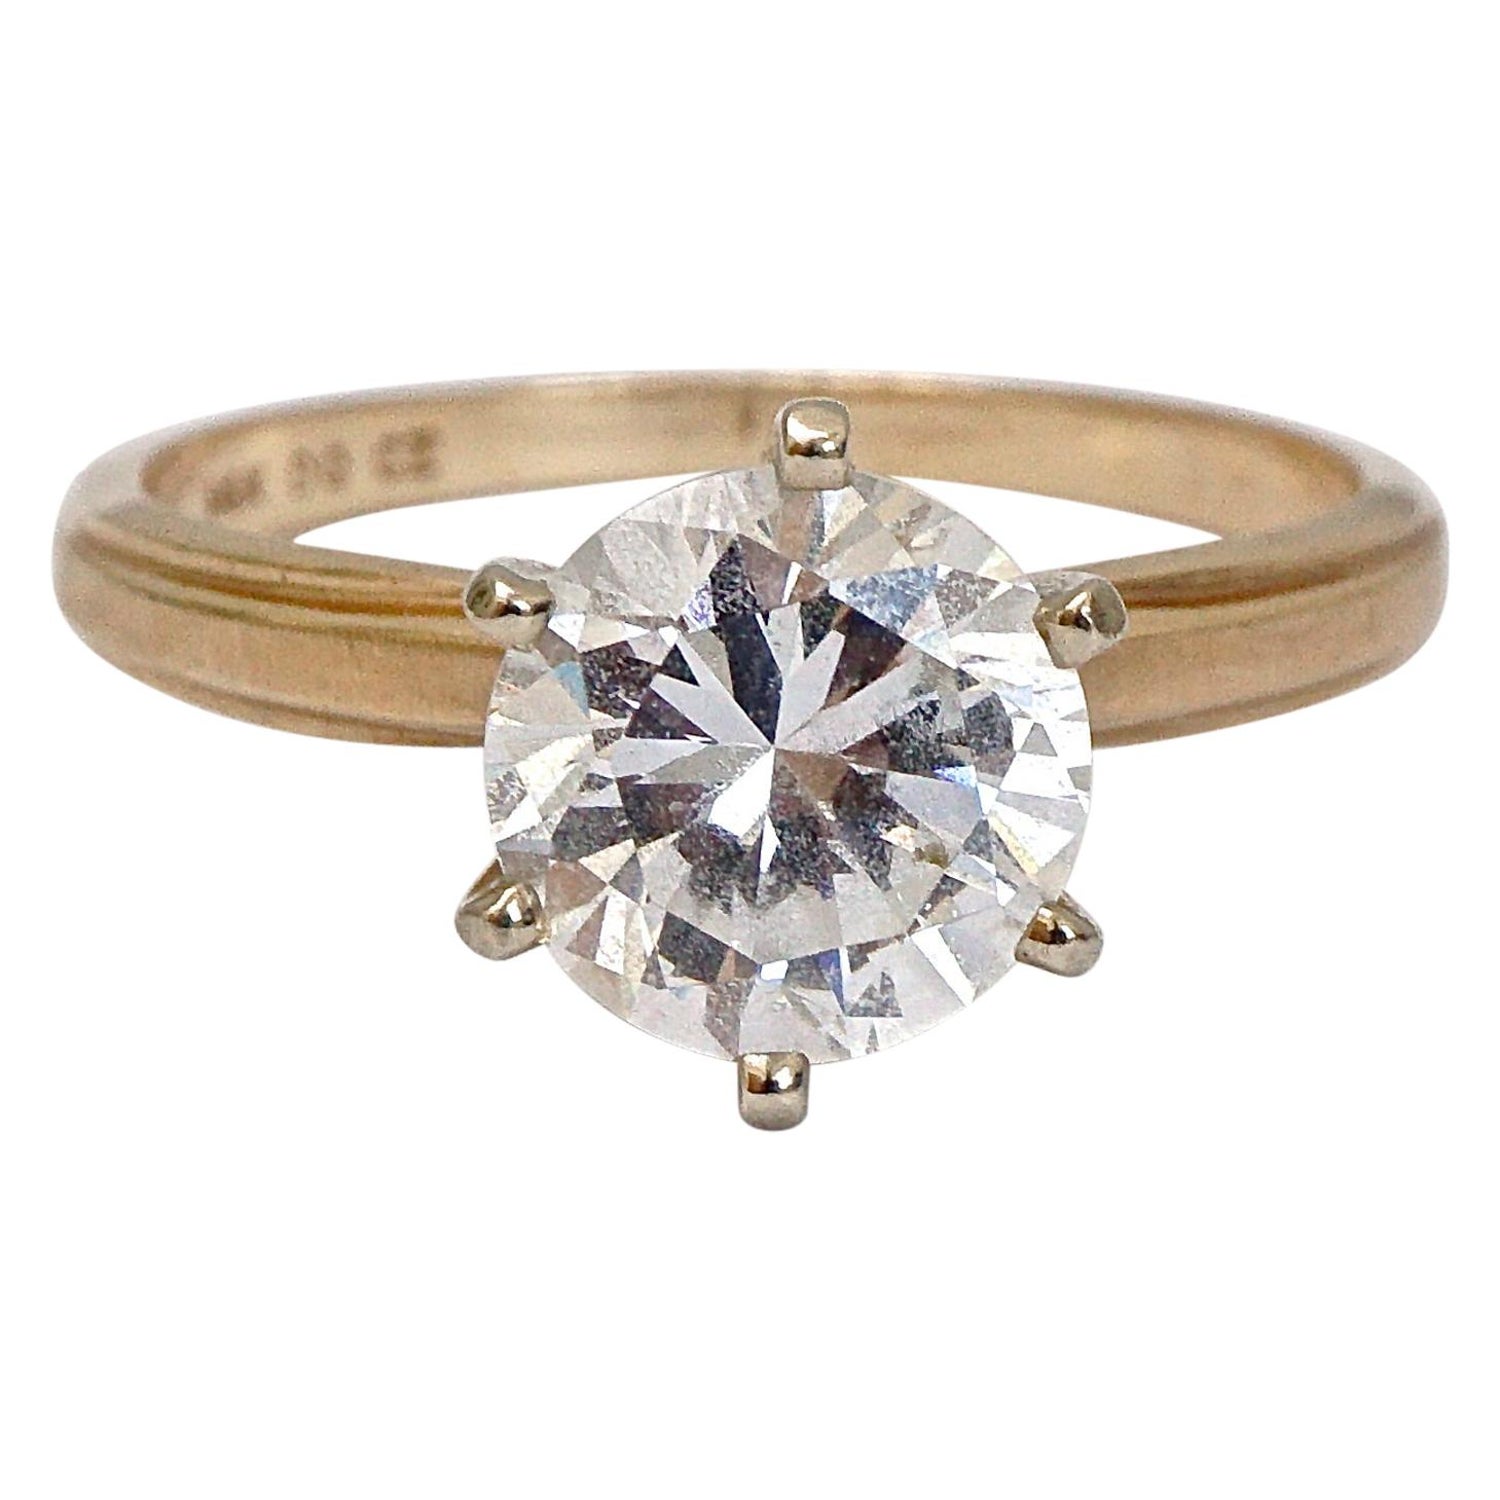 Black Cubic Zirconia Gemstone Ring Oval Shape Wedding Ring 18k White Gold Plated Ring Black Spinel Engagement Ring US6